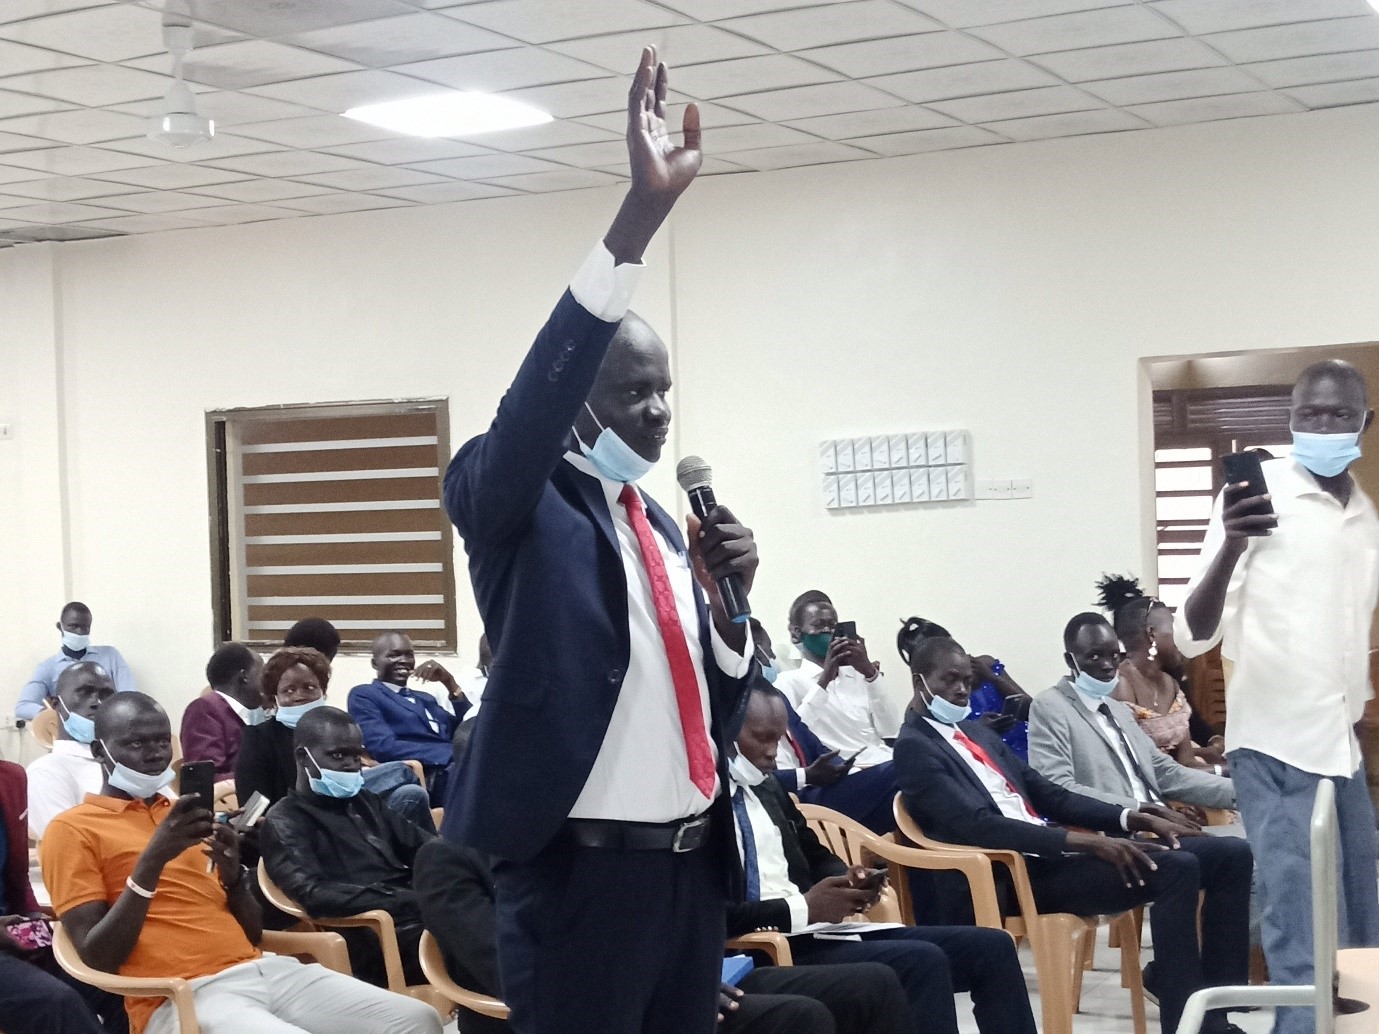 Student leader takes oath at Dr. John Garang University